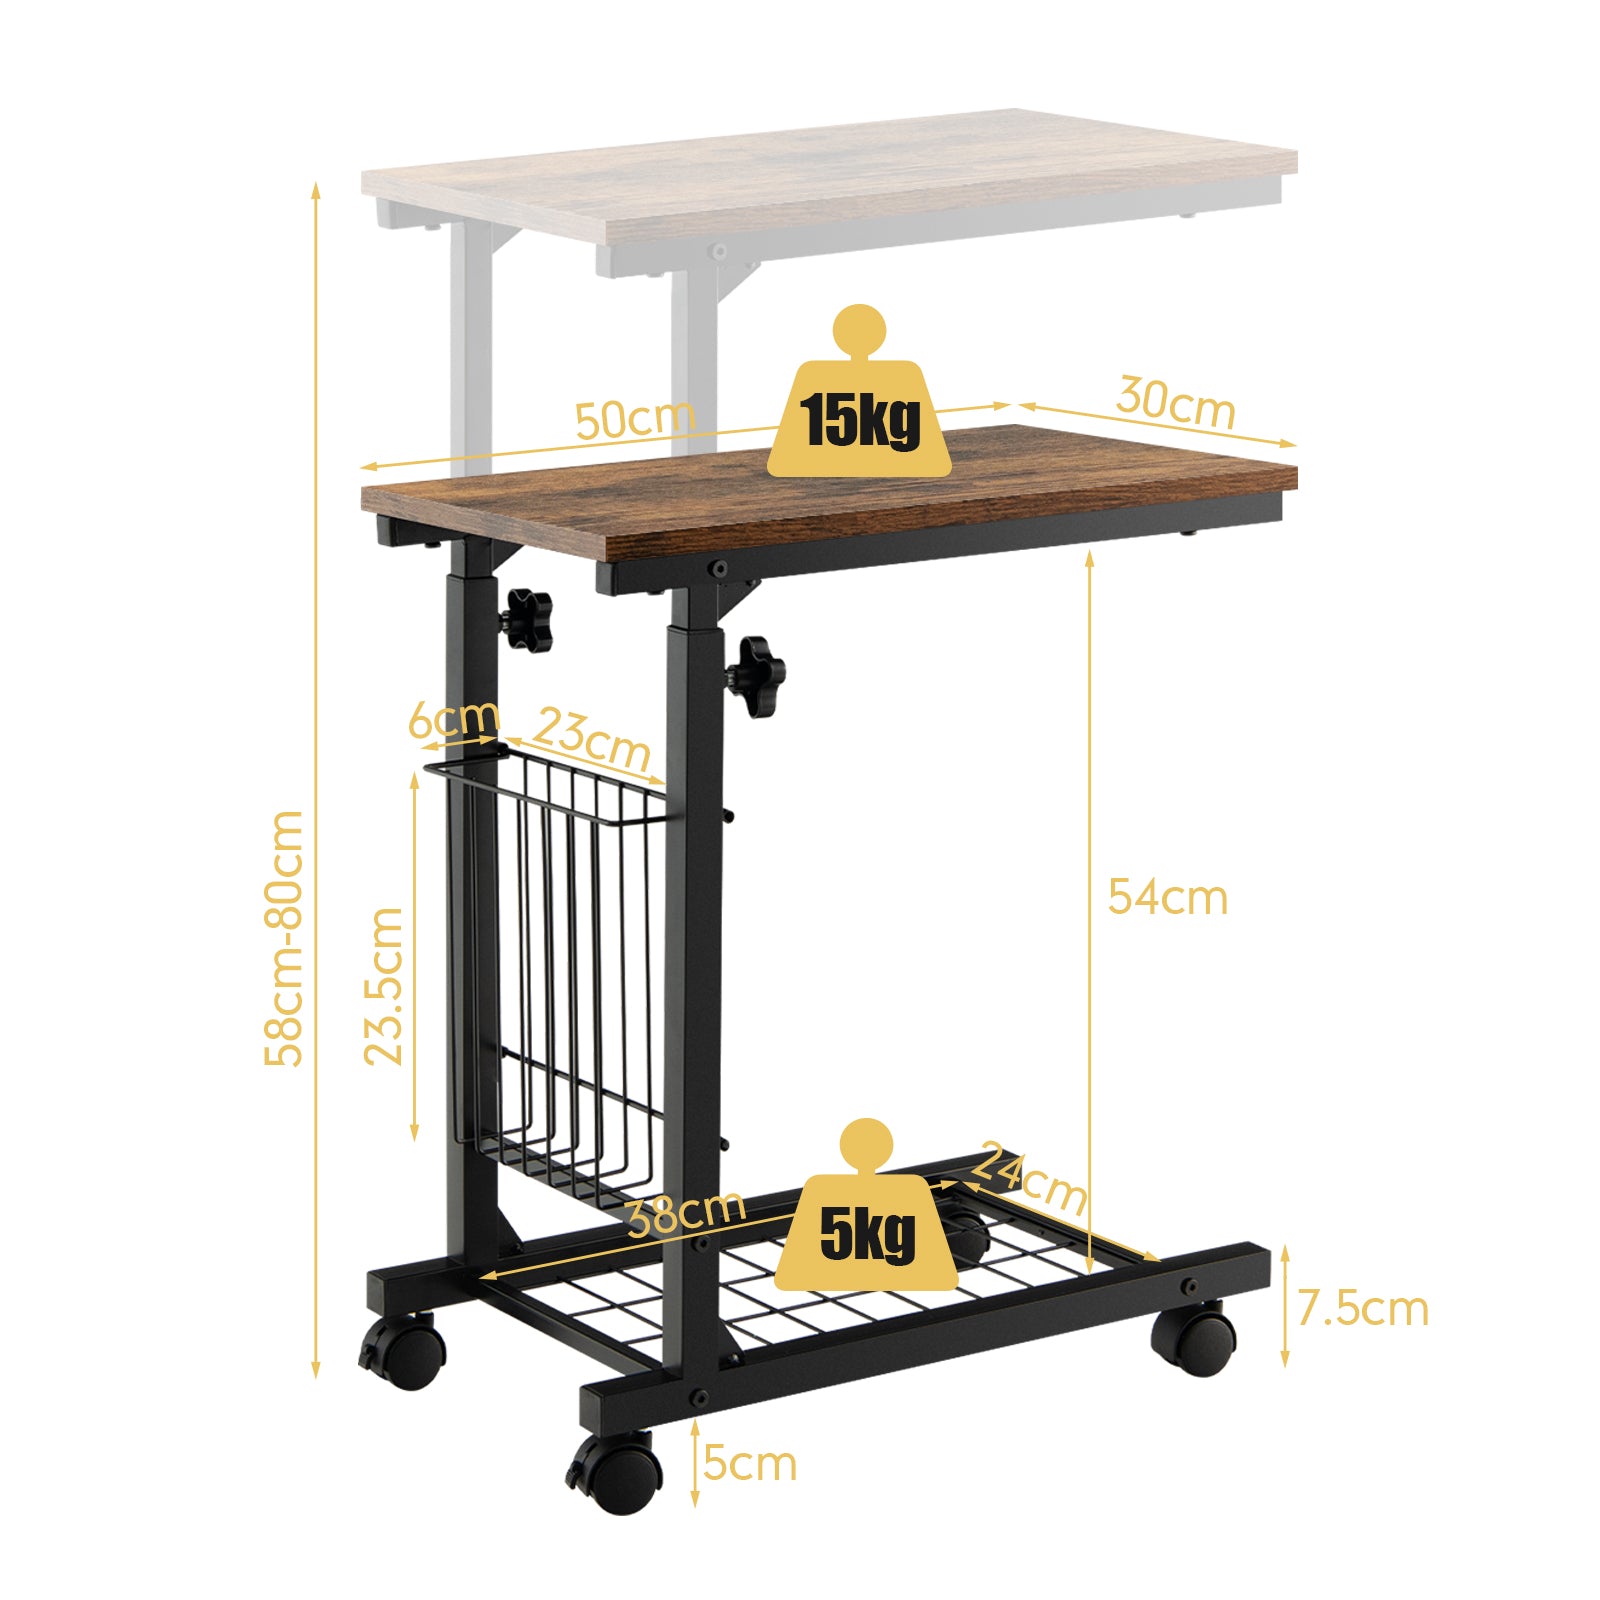 C-shape Adjustable End Table with Storage Basket-Rustic Brown